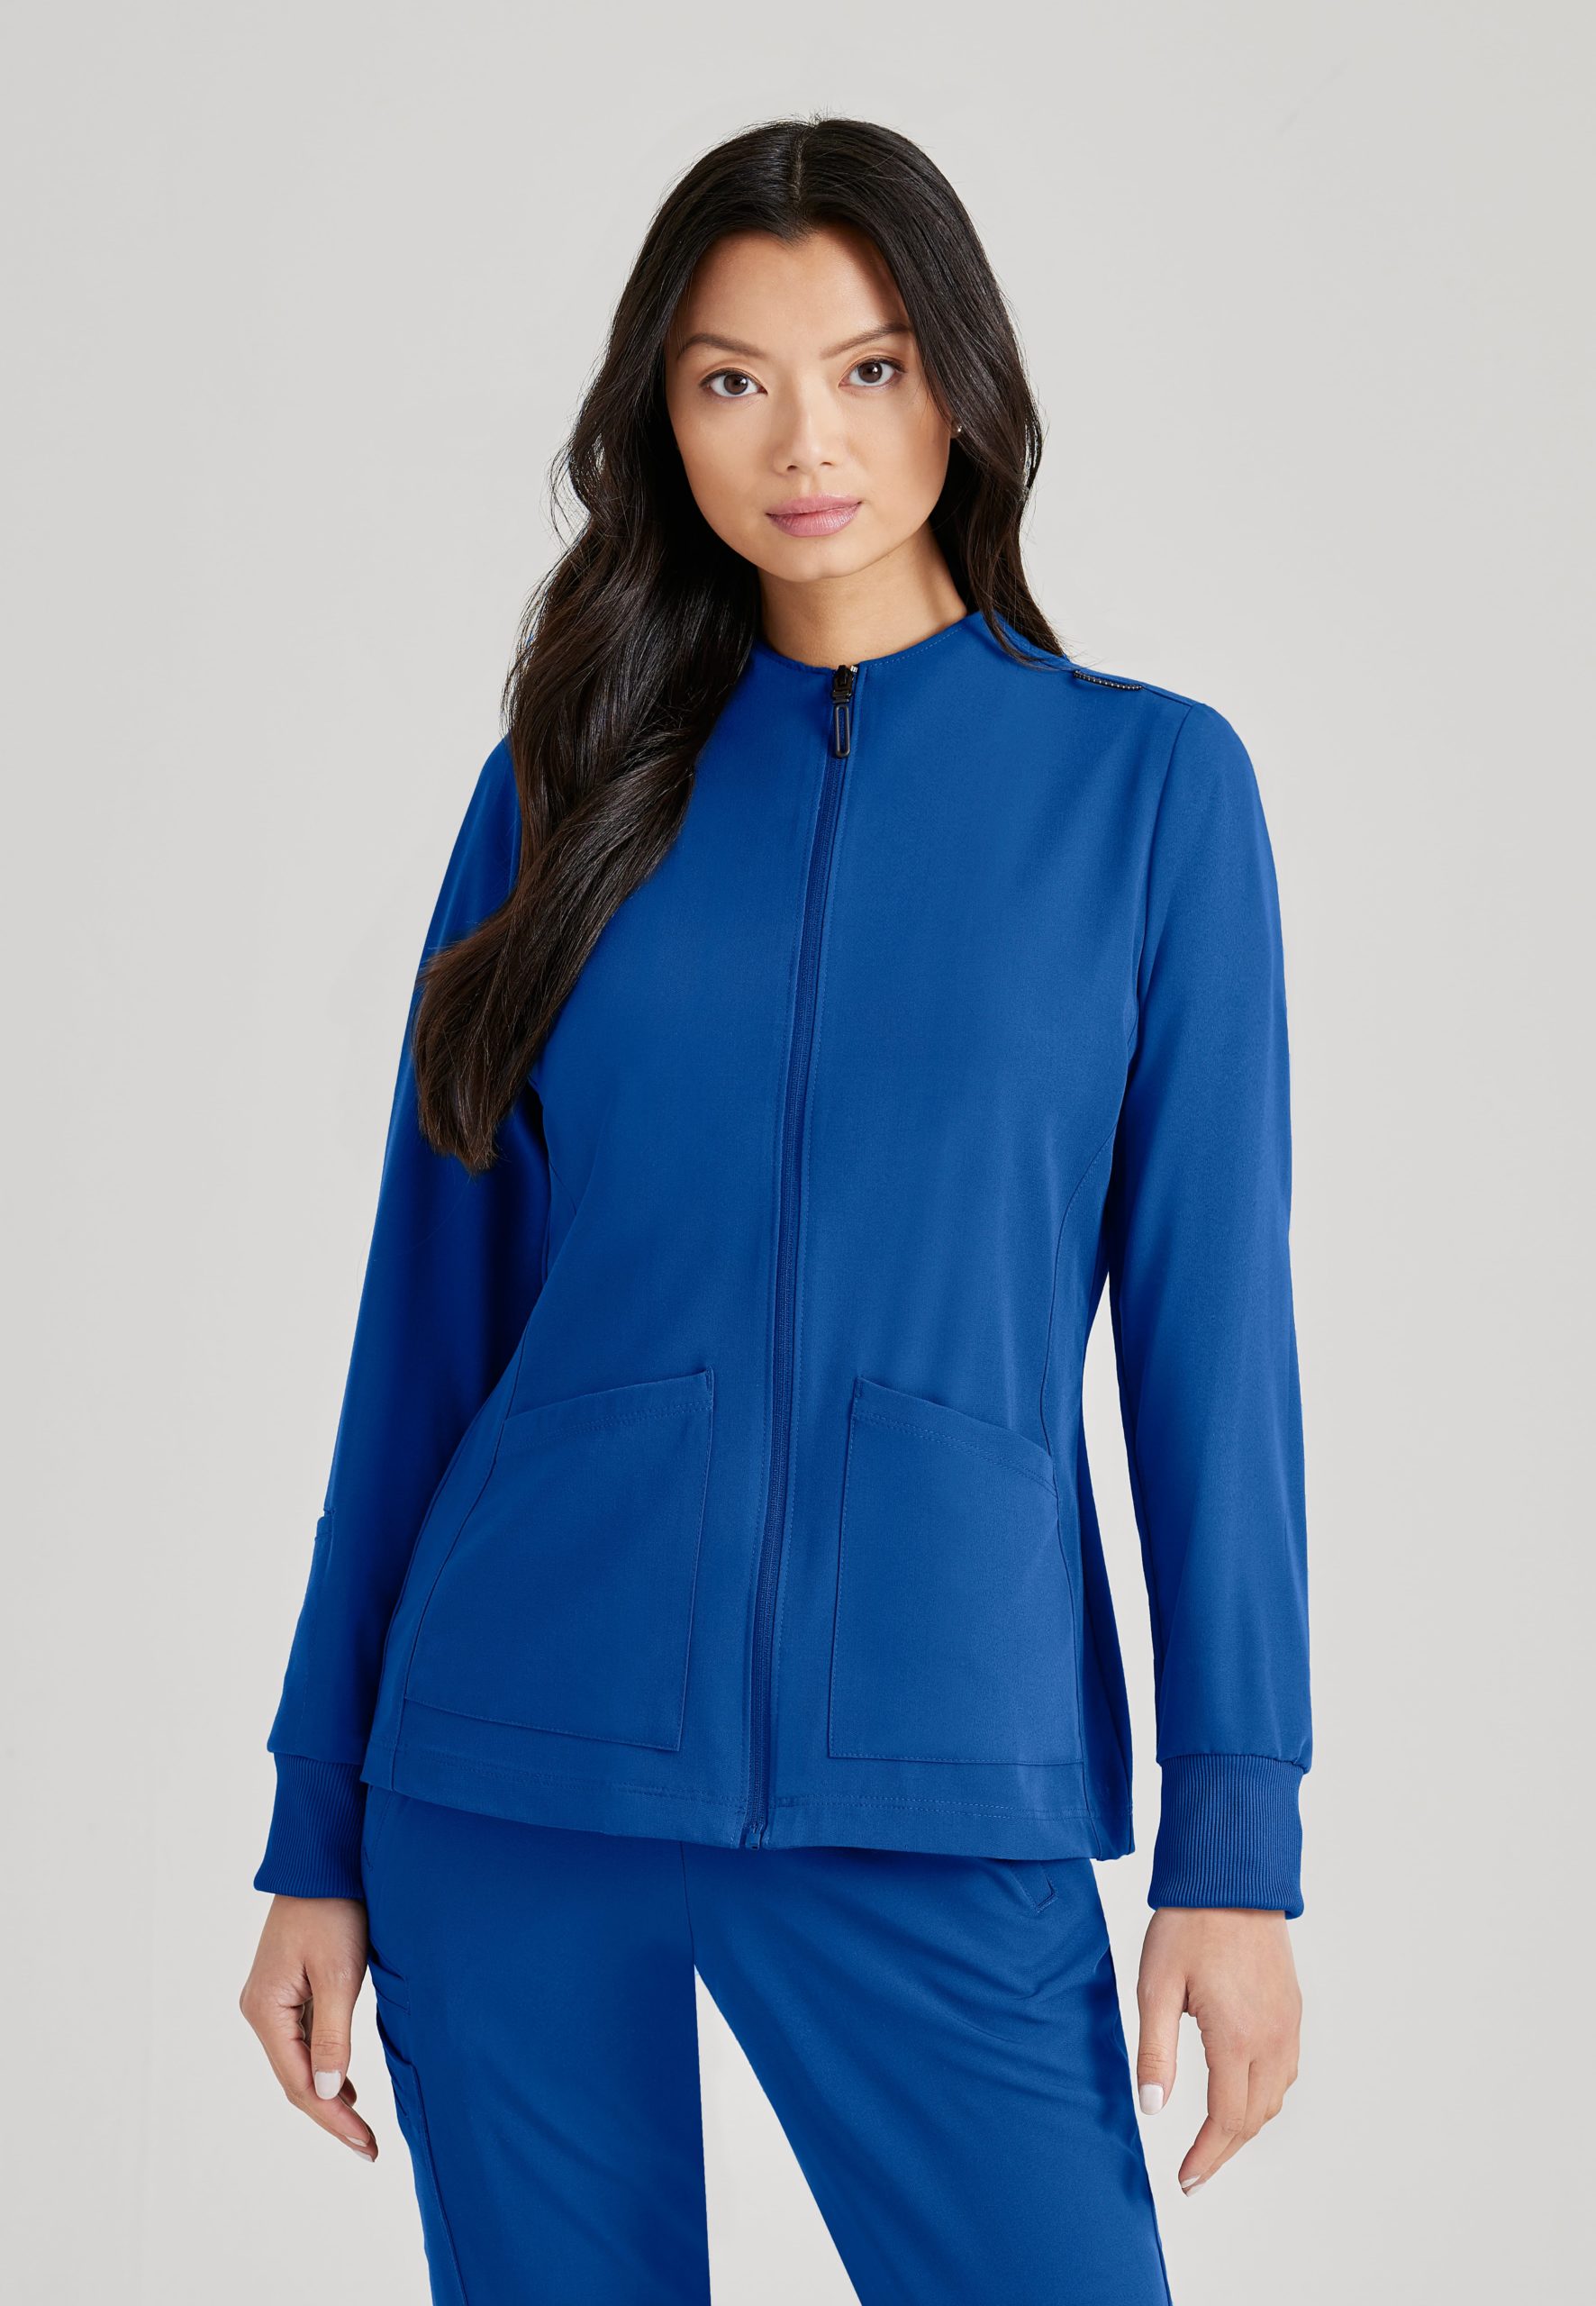 Barco Unify Women’s Zip Front Warm Up Jacket – #BUW884 | Jefferson